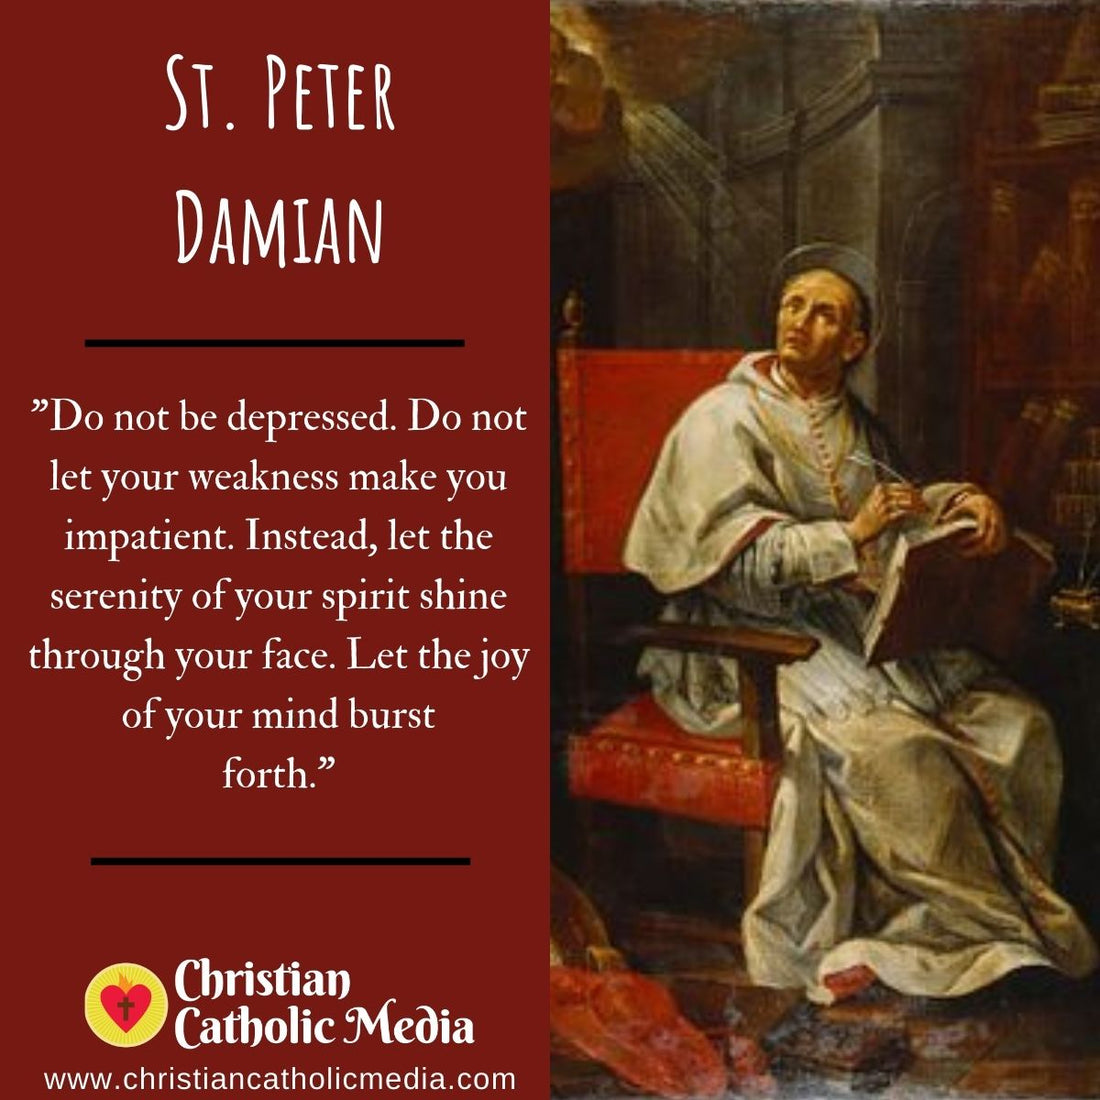 St. Peter Damian - Sunday February 21, 2021